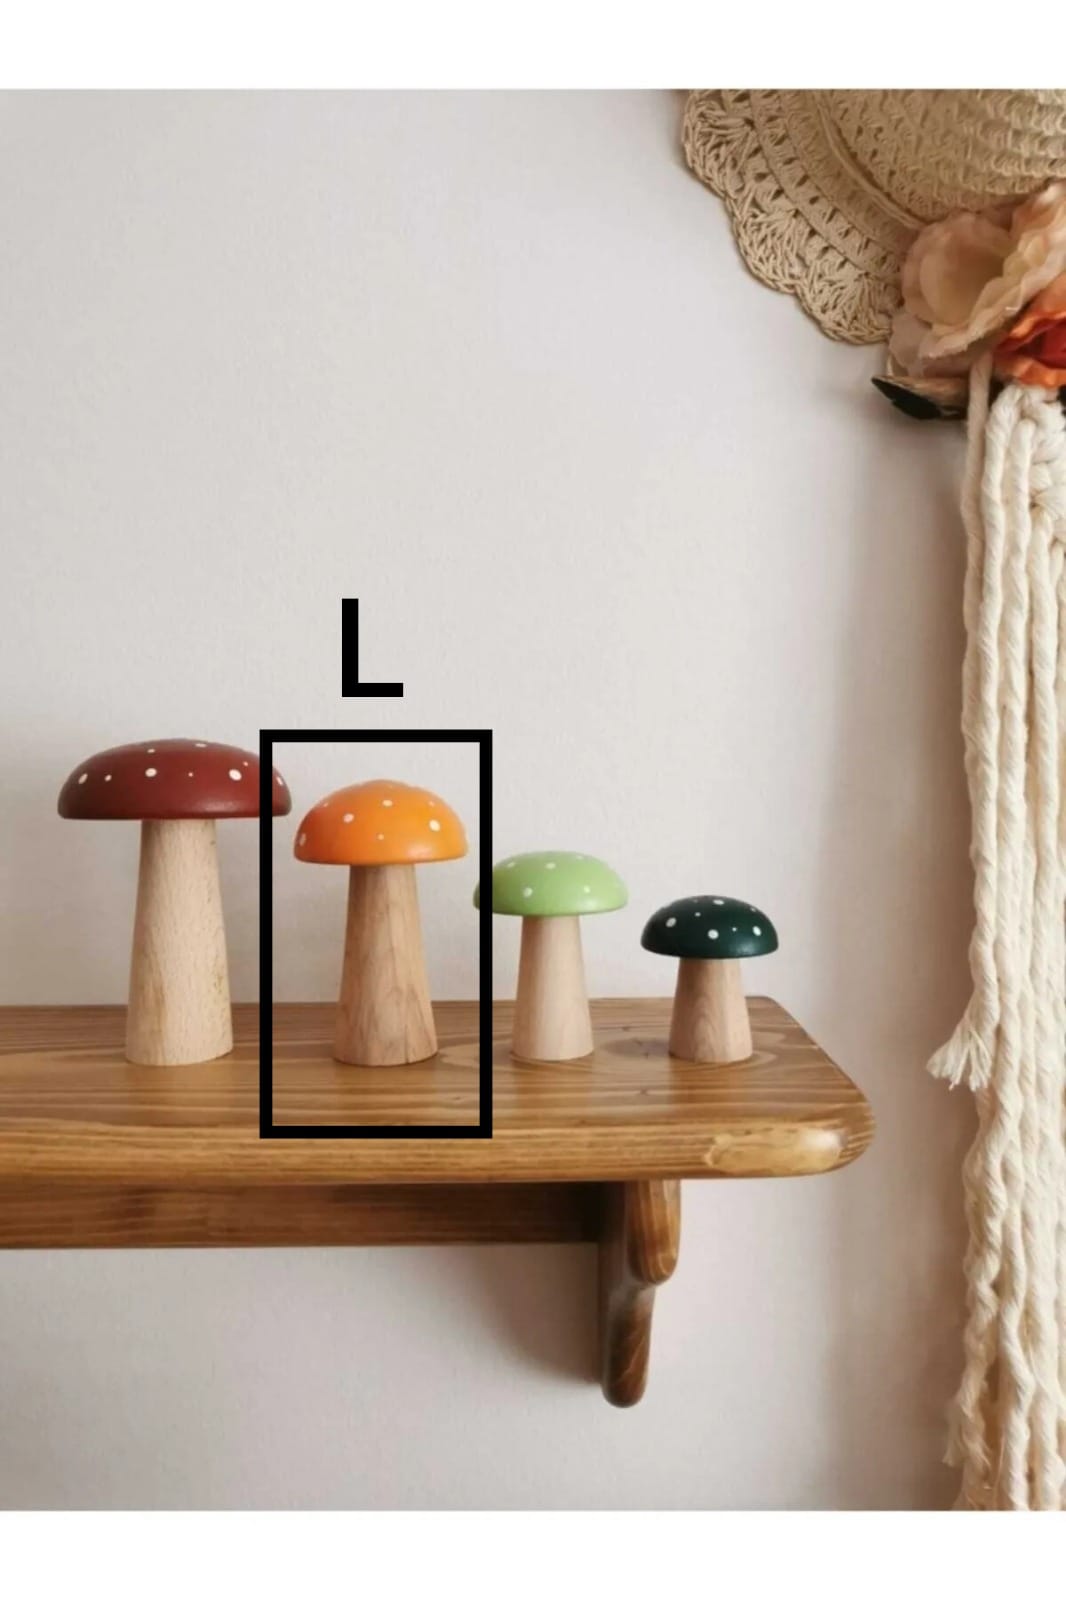 Wooden Vintage Mushroom Toy